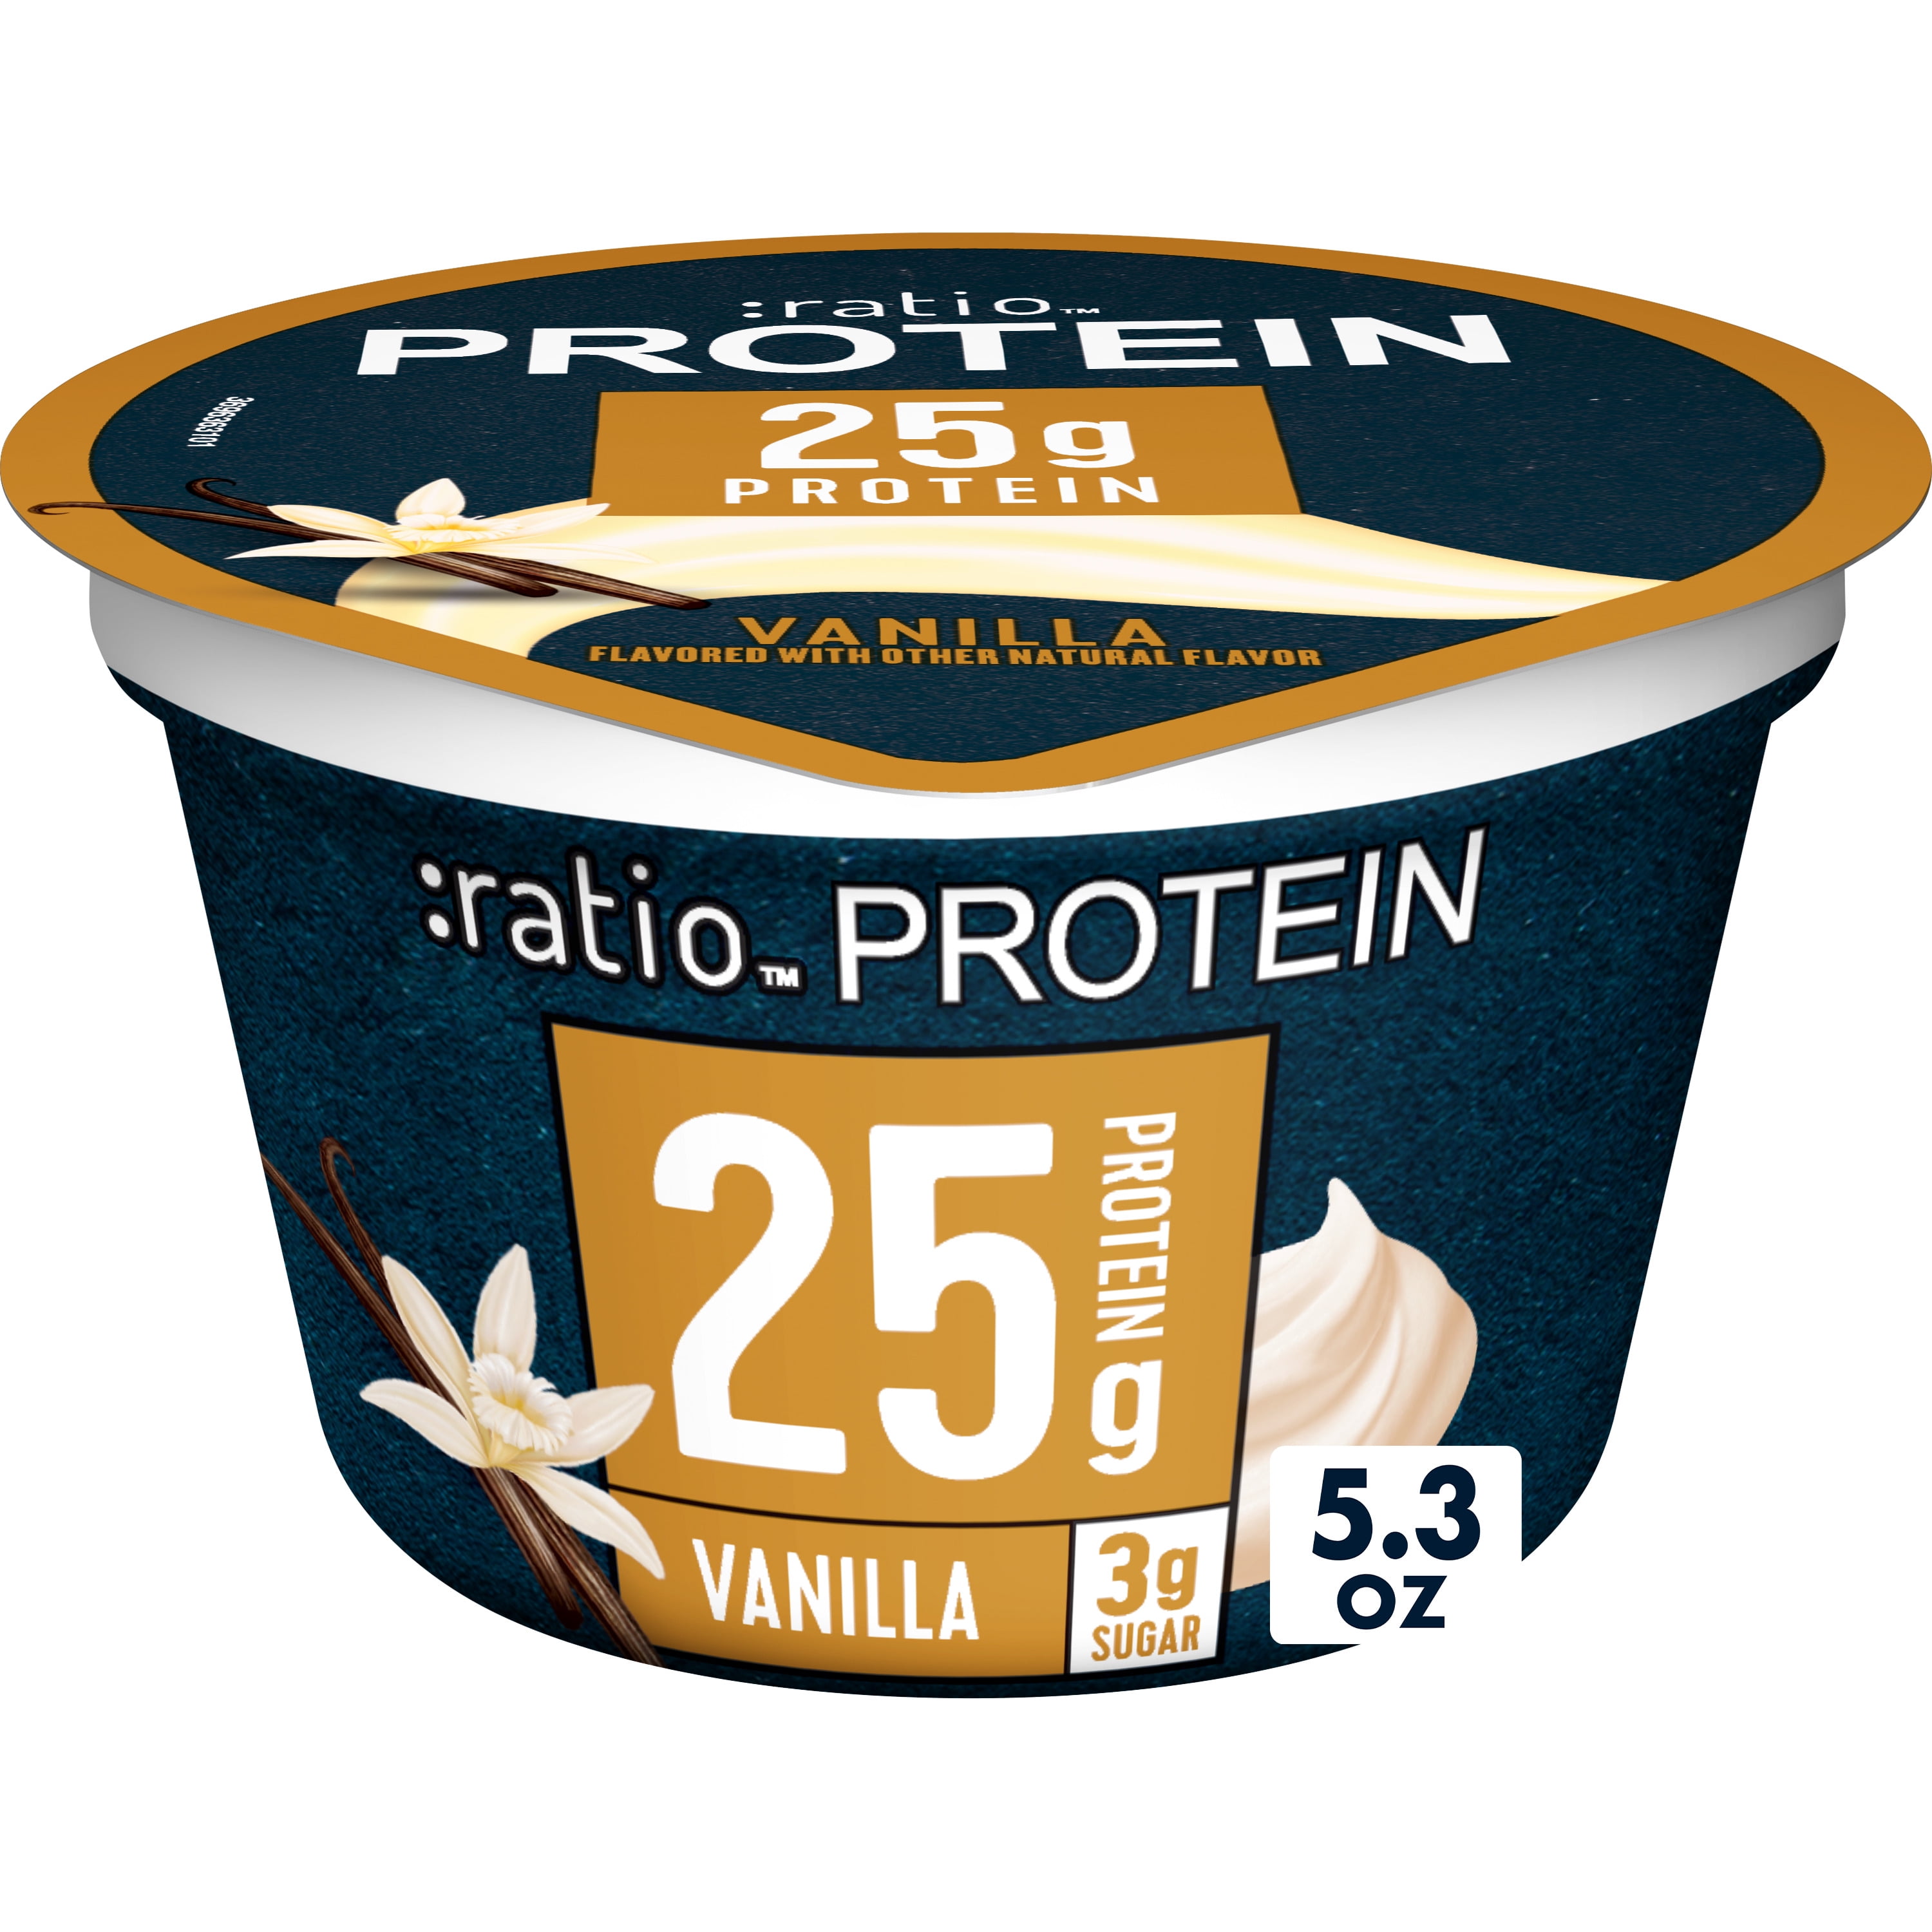 Ratio Yogurt Protein Cultured Dairy Snack, Coconut, 25g Protein